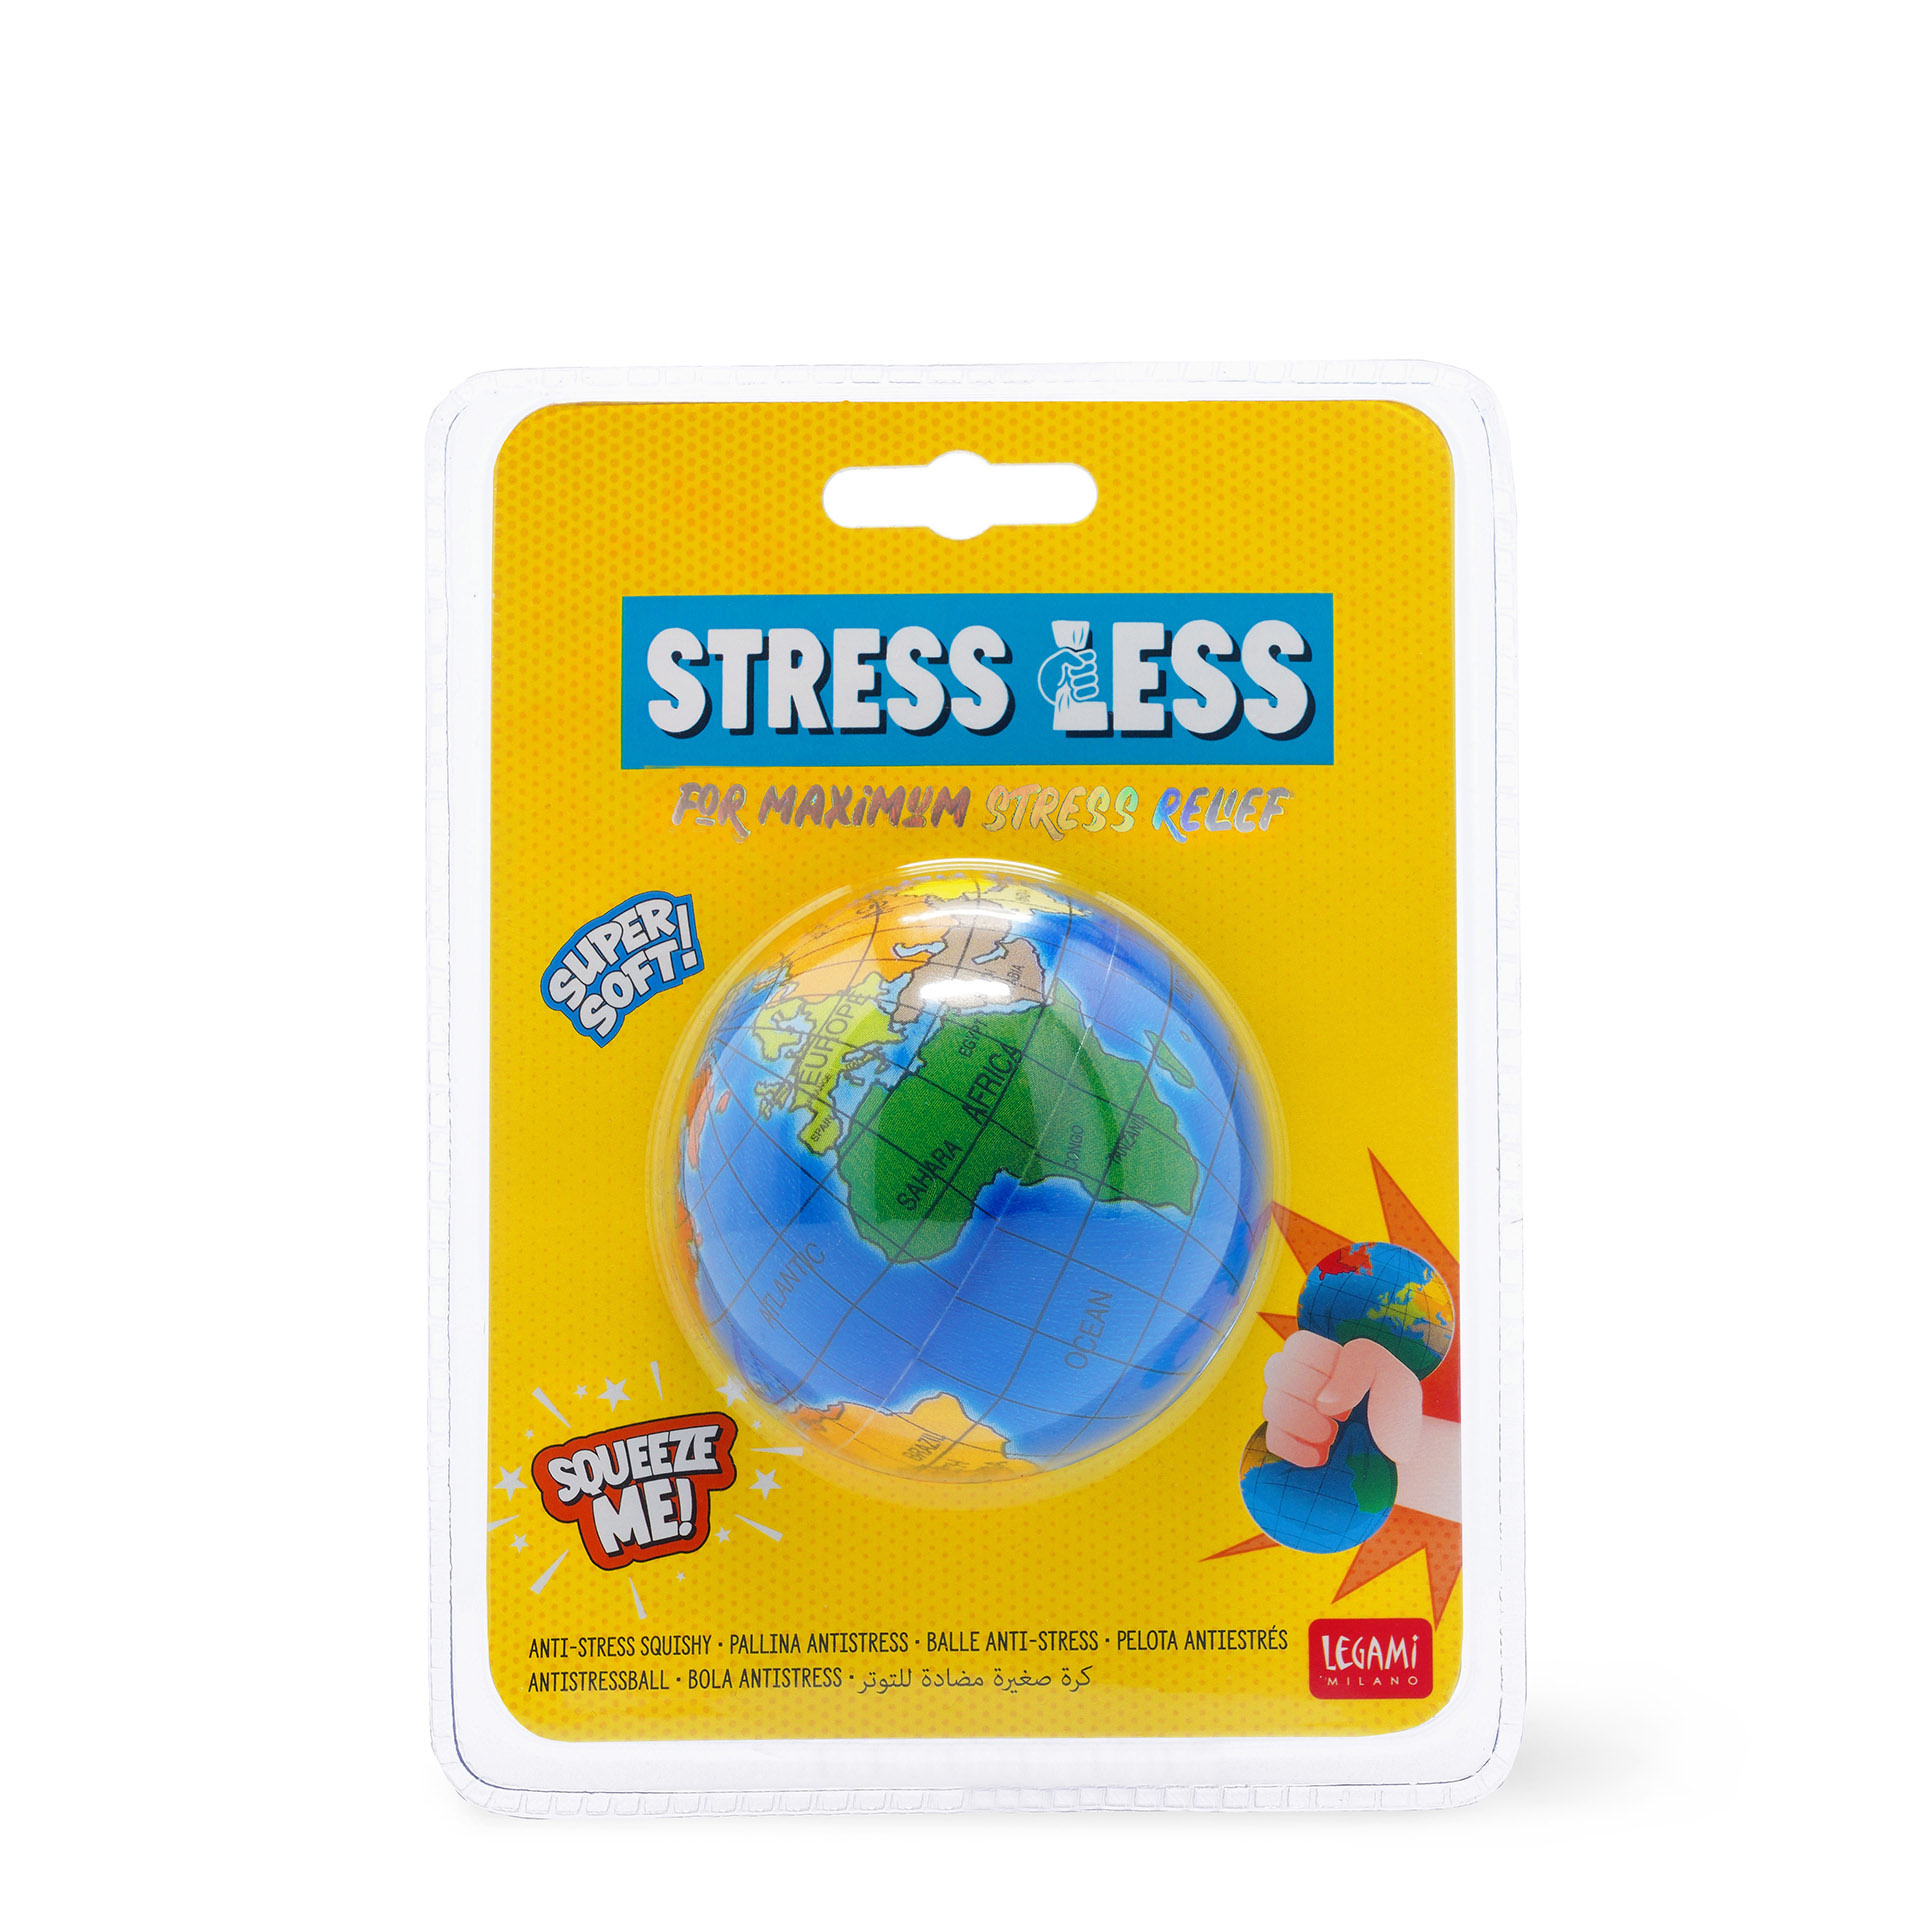 Balle anti-stress - Stress Less TRAVEL